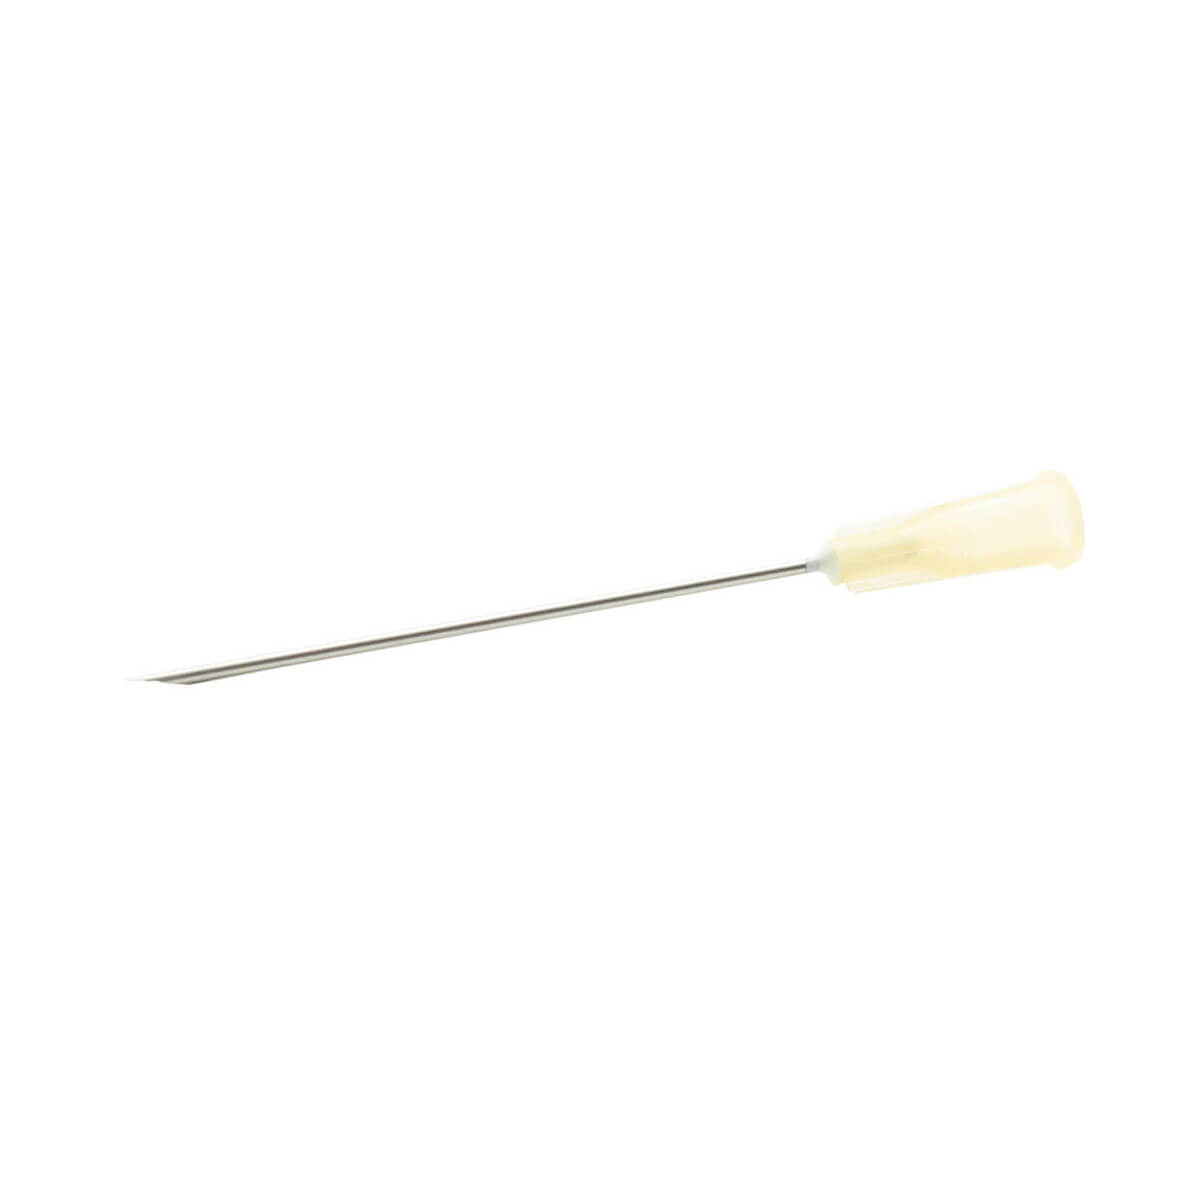 BD Microlance Needle Cream 19G 50MM